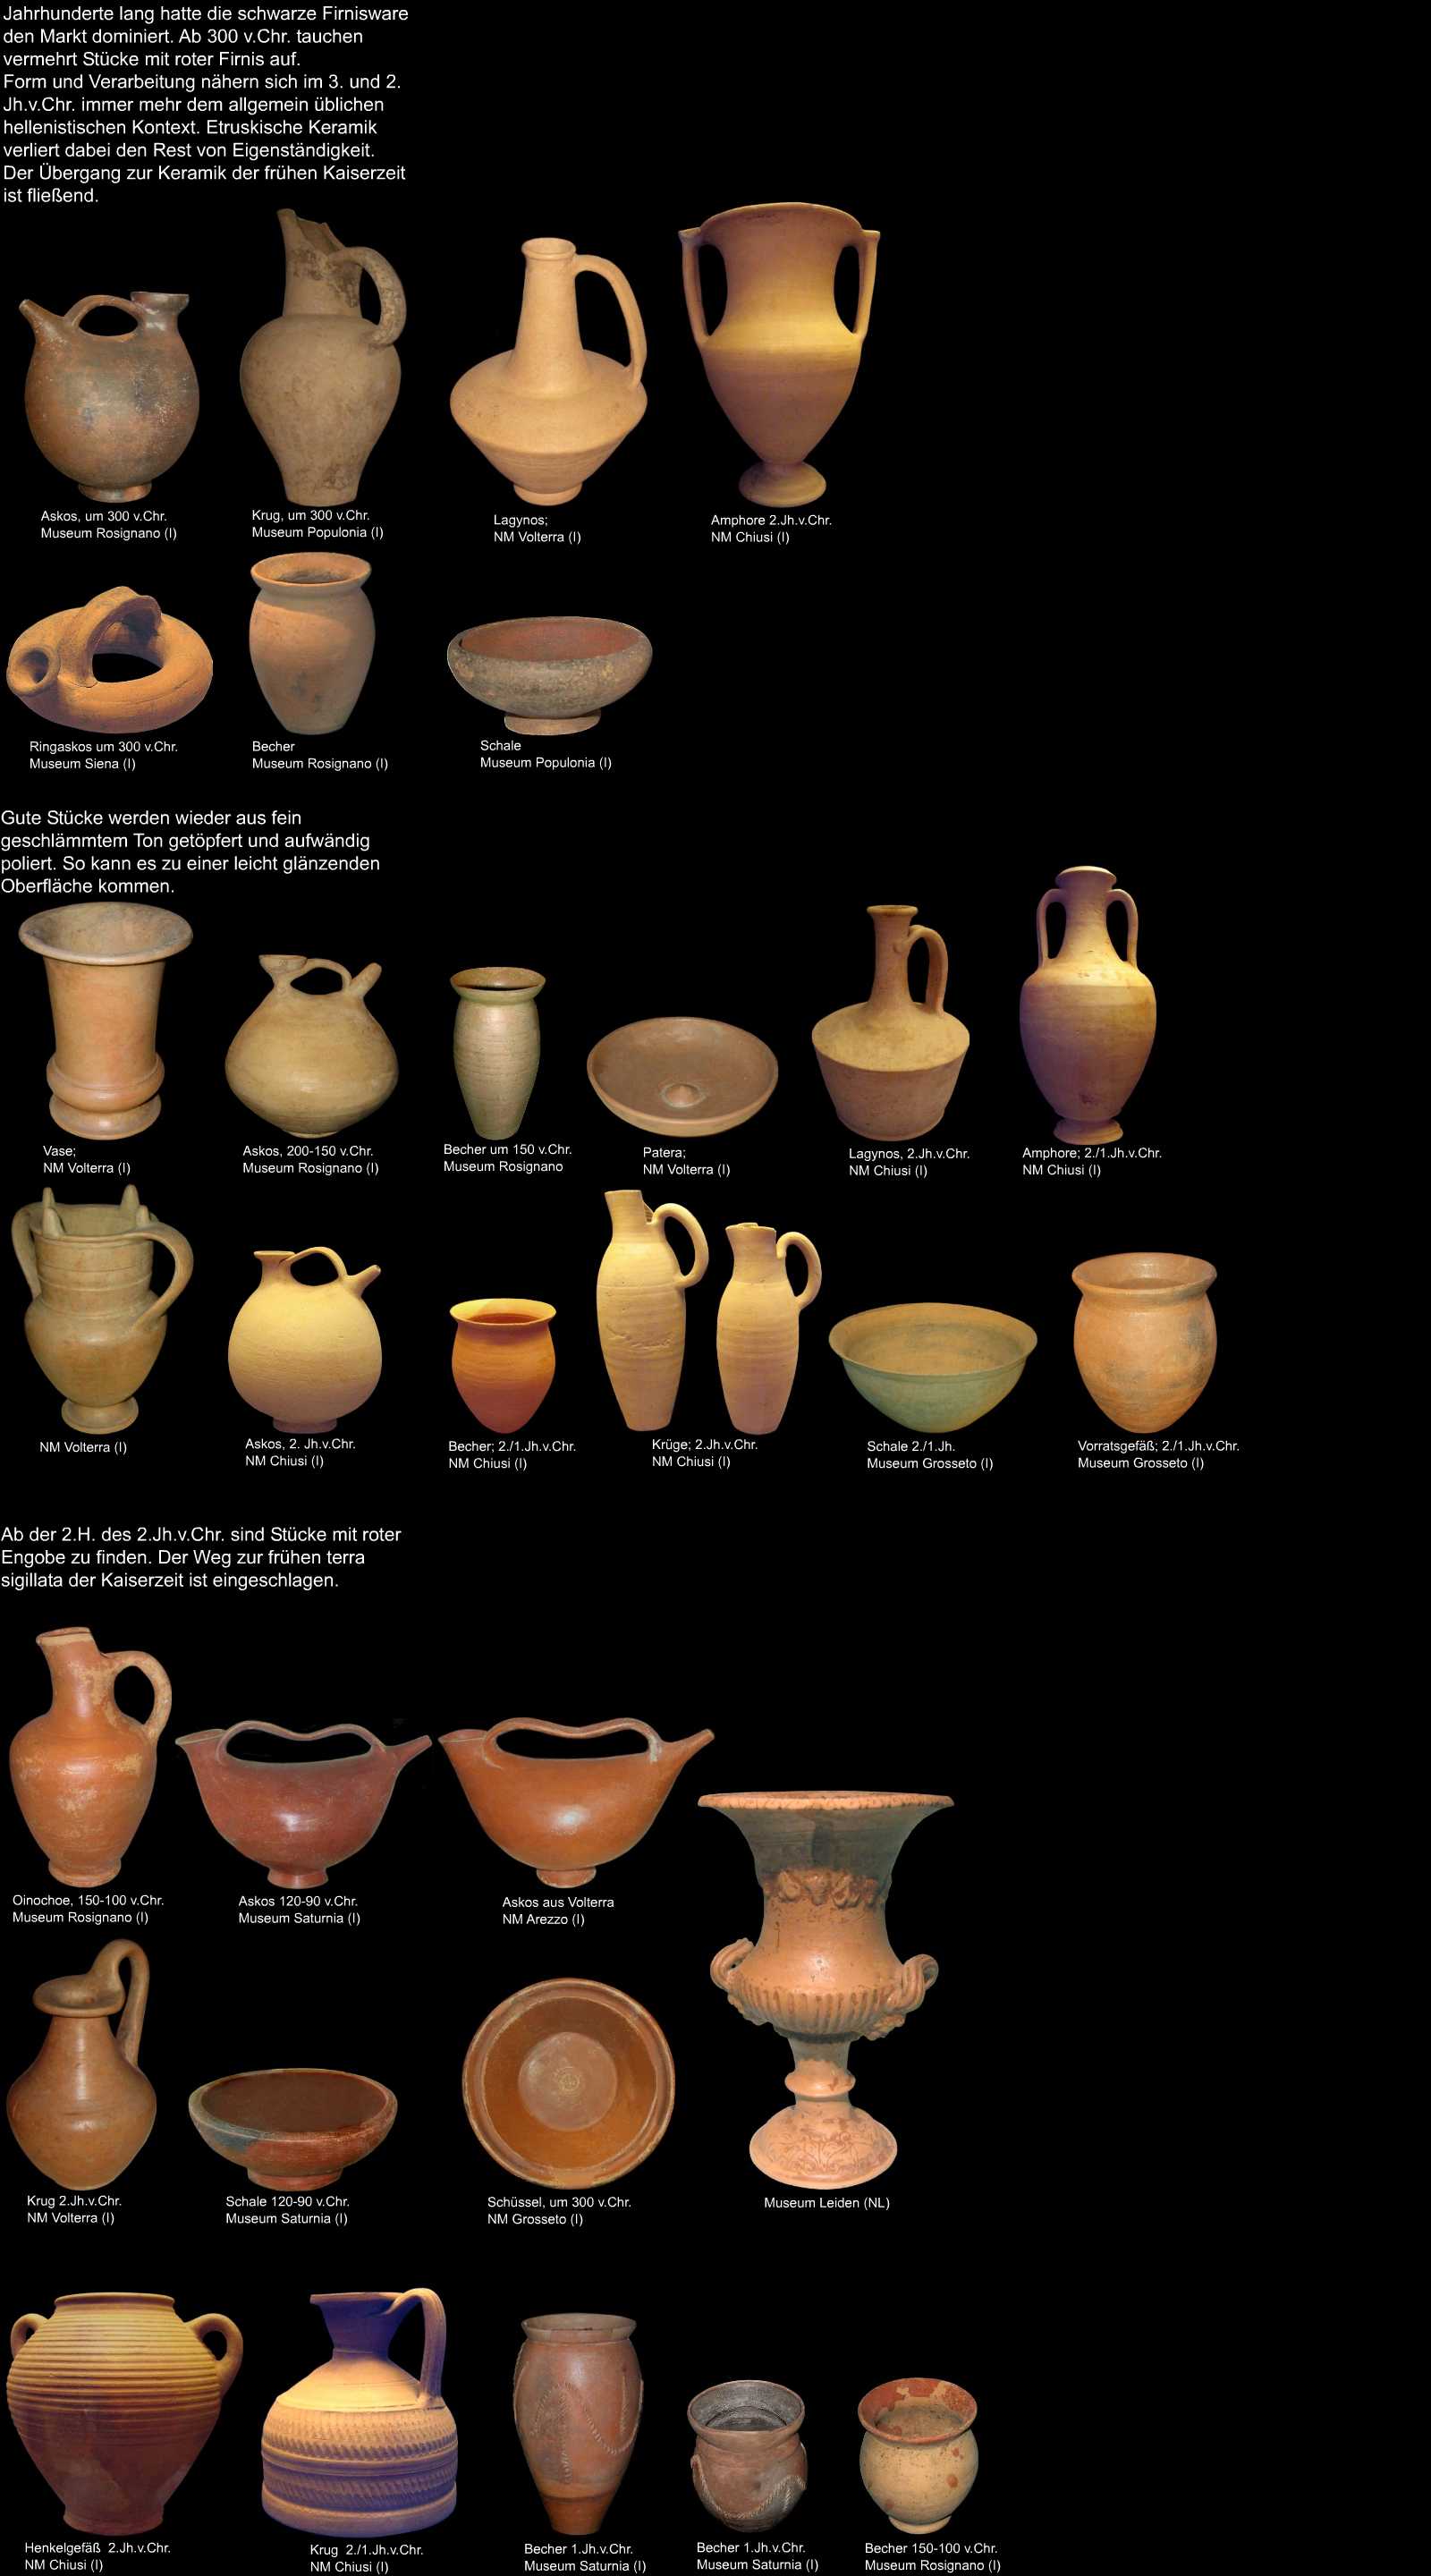 späte rottonige Keramik der Etrusker